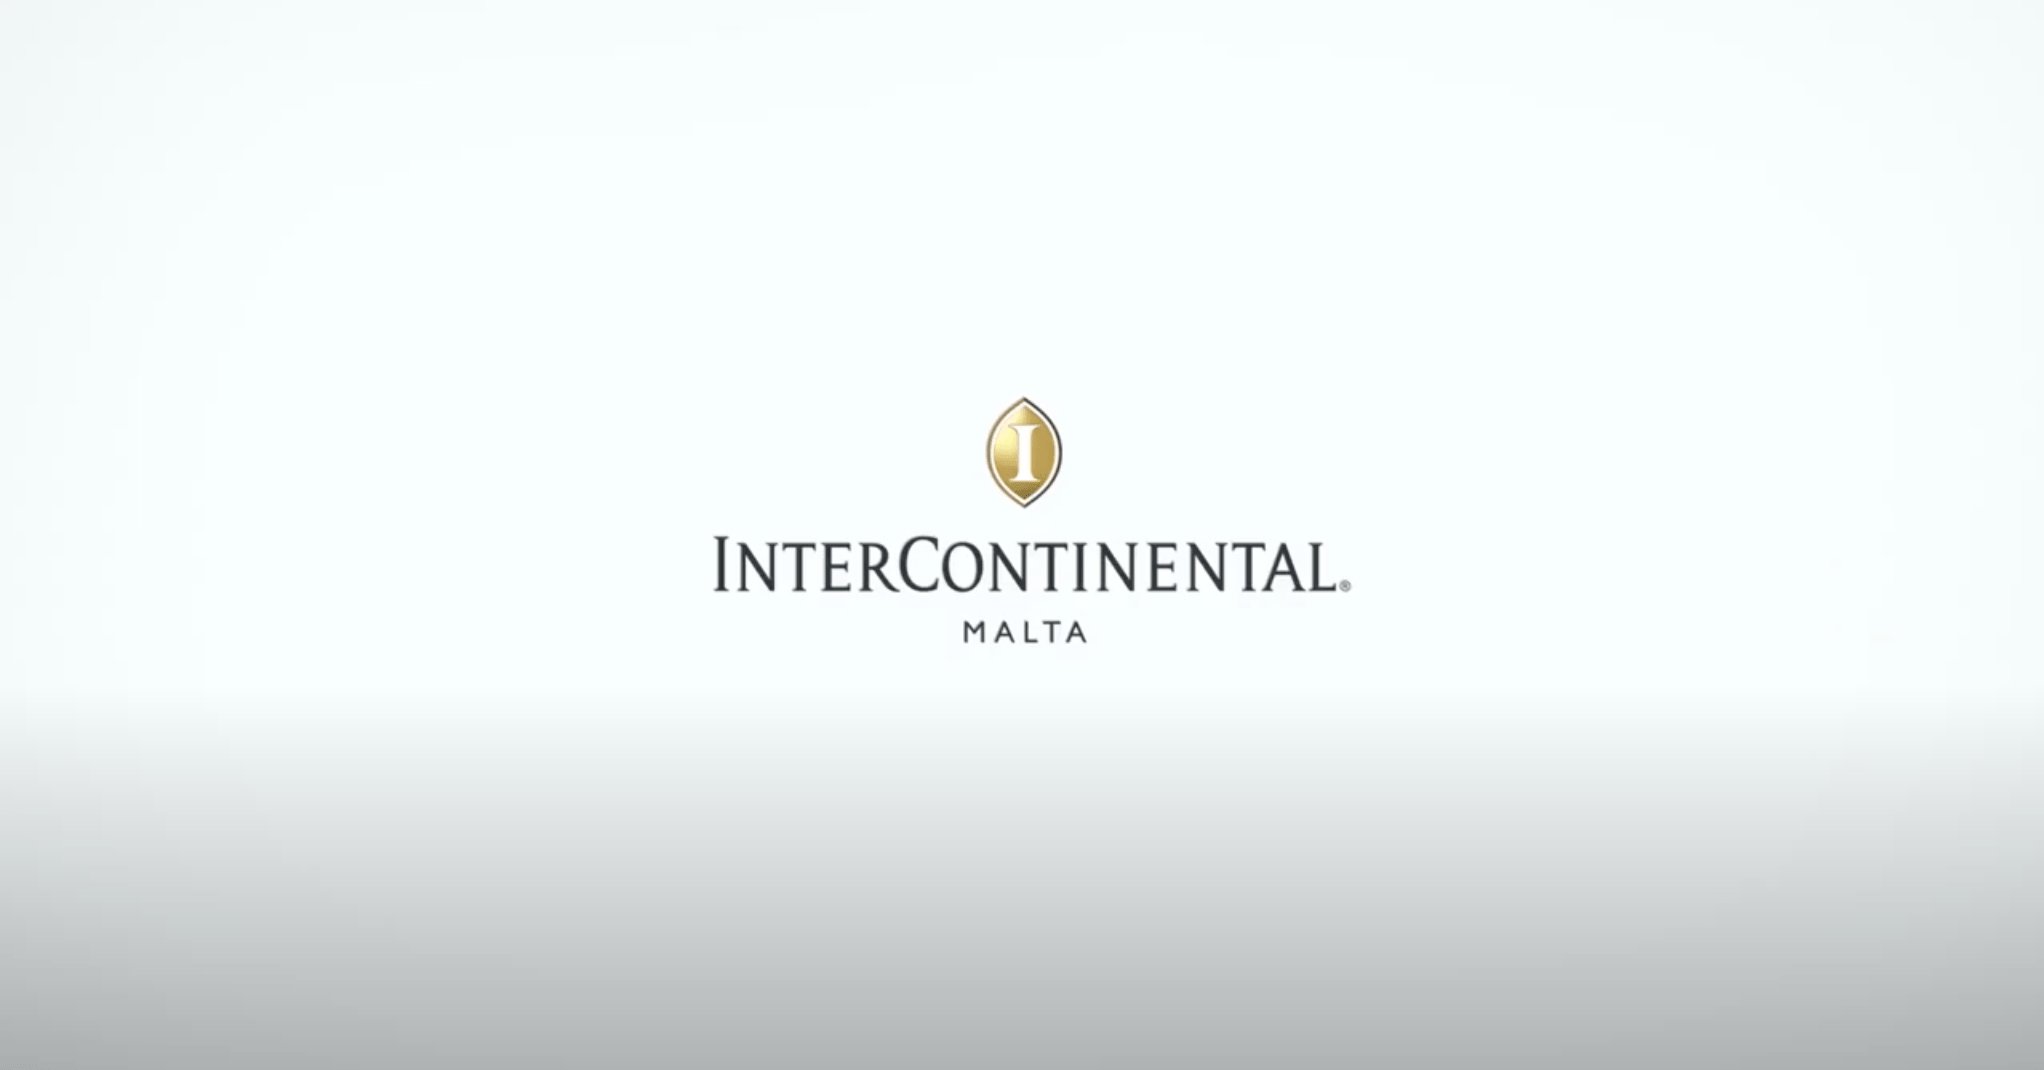 Intercontinental Malta